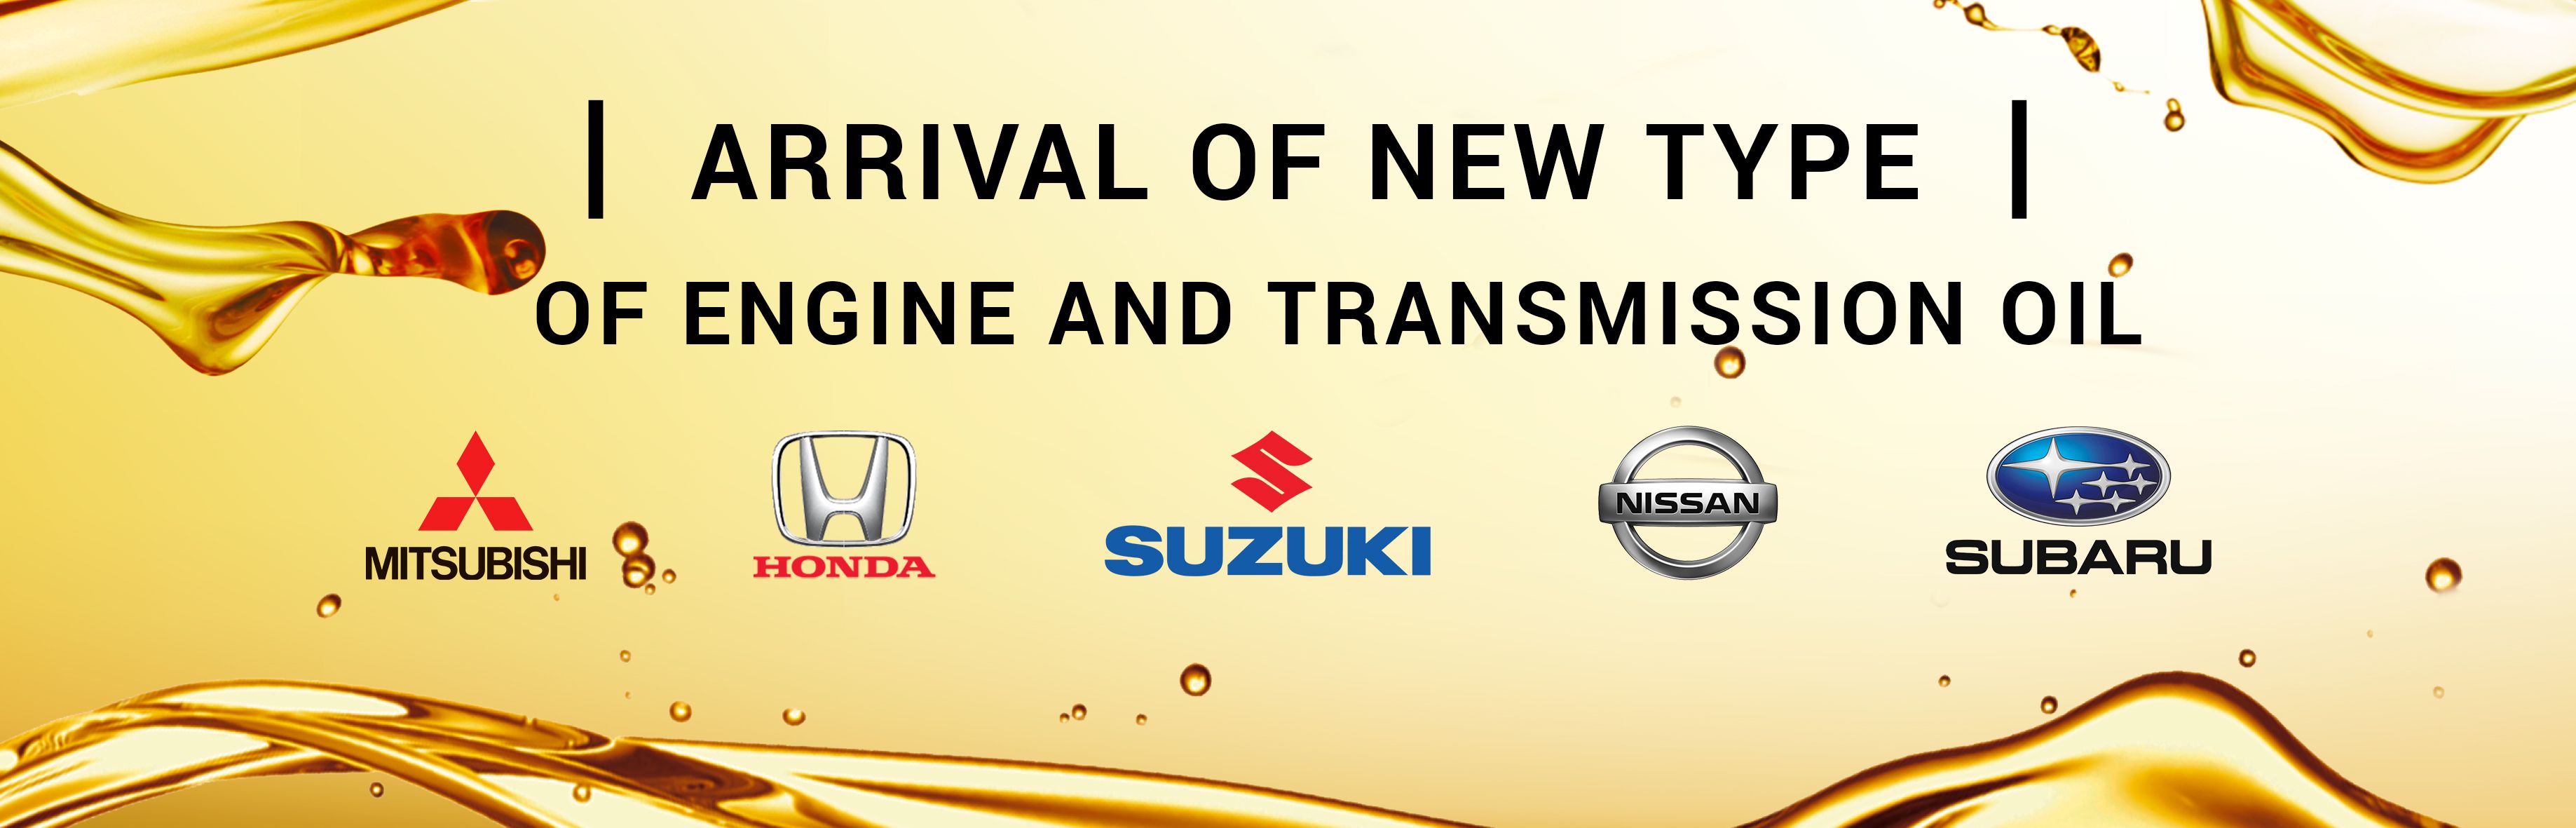 Arrival of new types of engine and transmission oils for Honda, Mitsubishi, Subaru, Suzuki and Nissan.